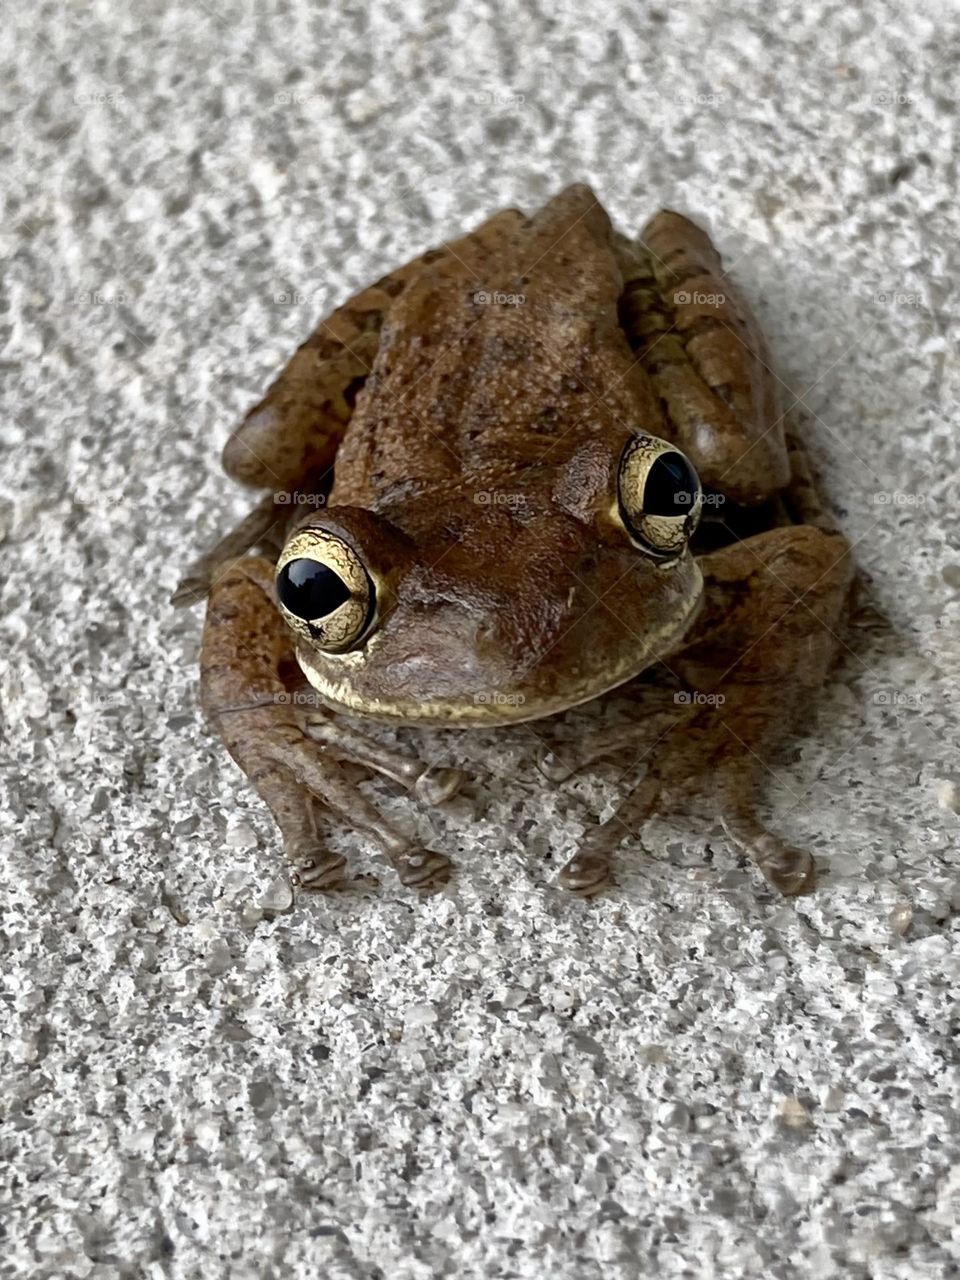 Wild Florida frog 🐸